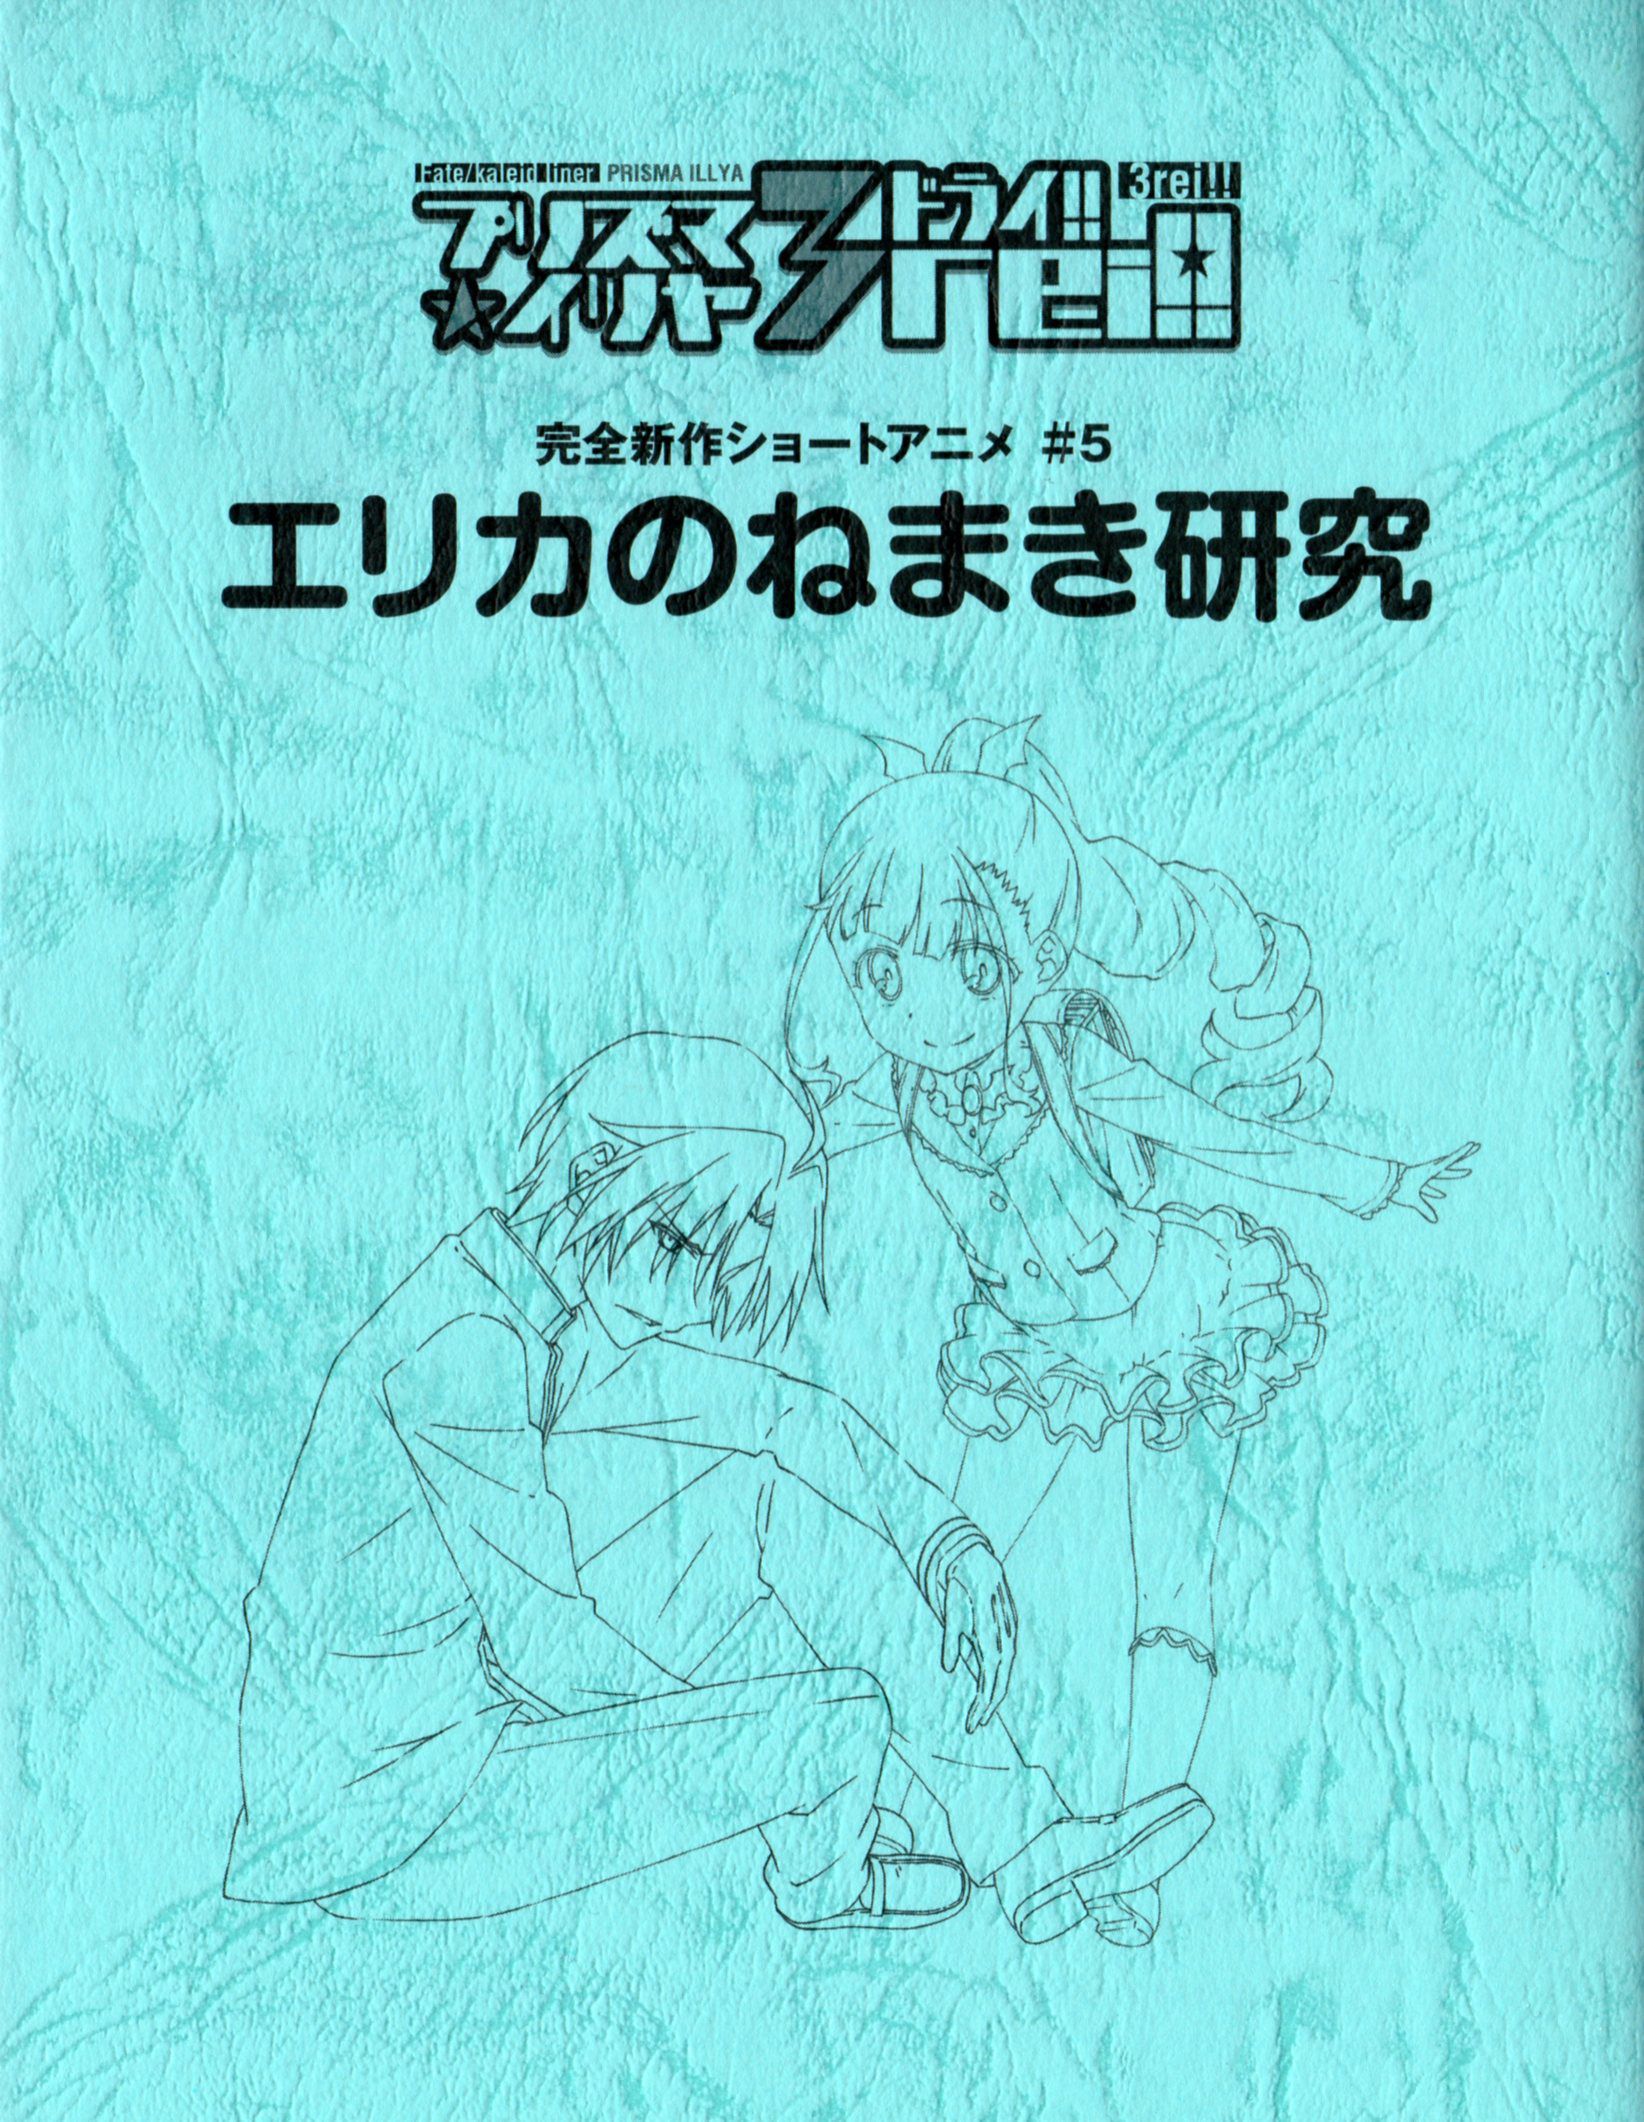 Fate/kaleid liner Prisma ☆ Ilya dry! BD vol. 5 "award animation Nightgown of Erica! reveal a kinky night dolls of sleeping! 」 122